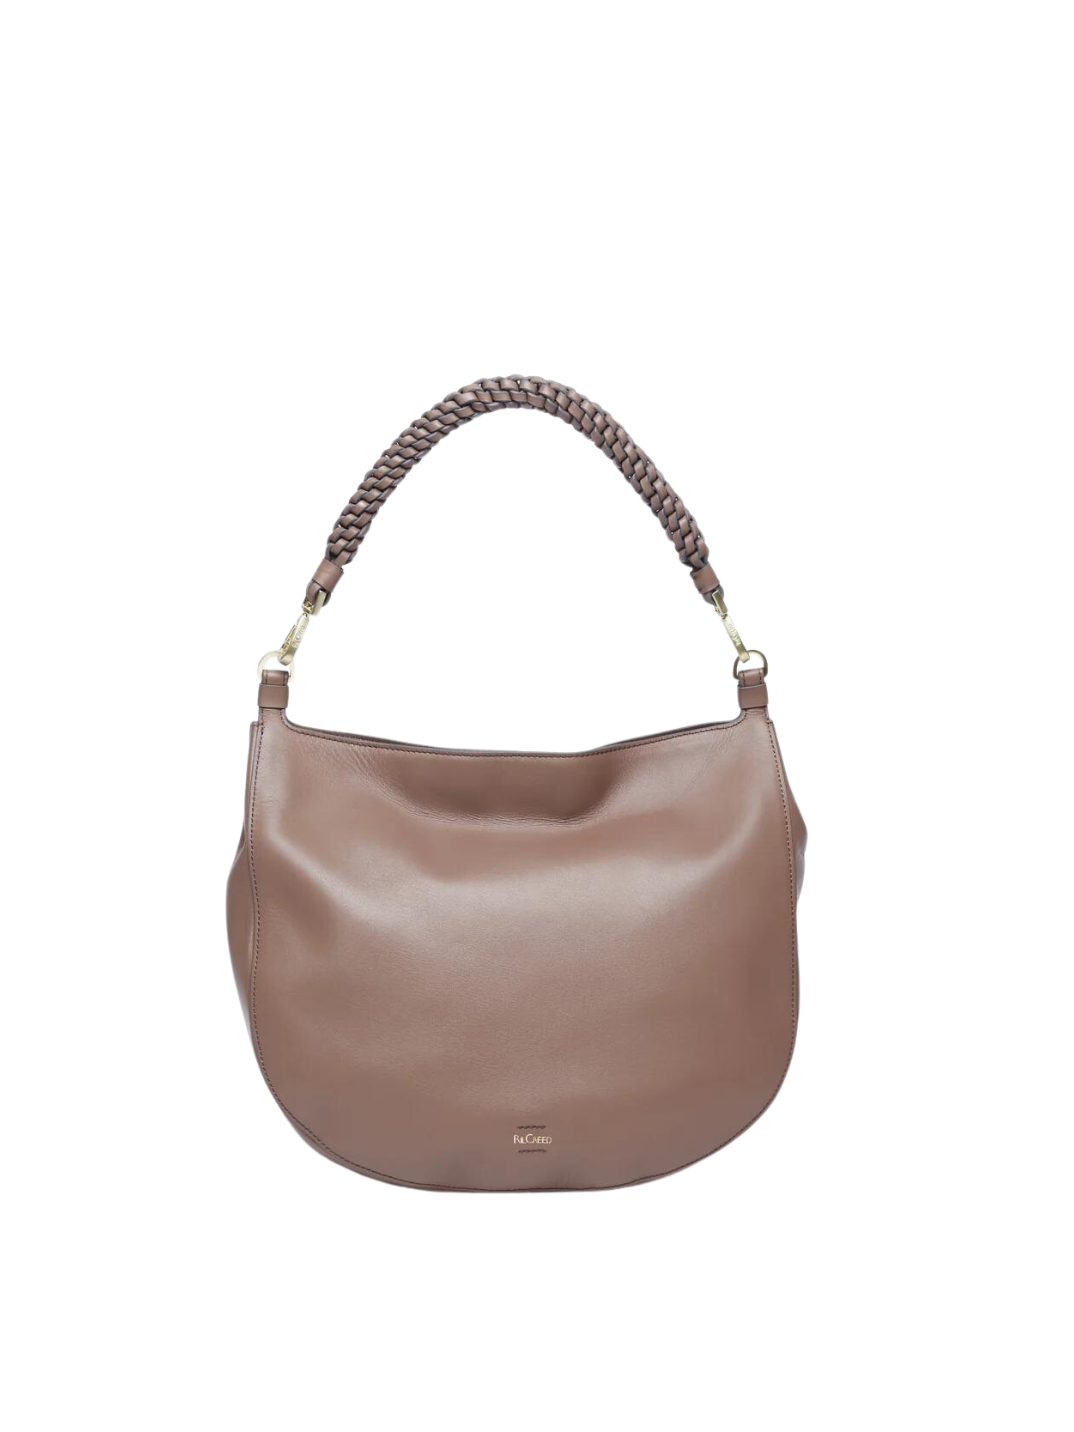 Erica leather bag sustainable upcycled genuine leather shop sustainable women's handbags trendy fashion